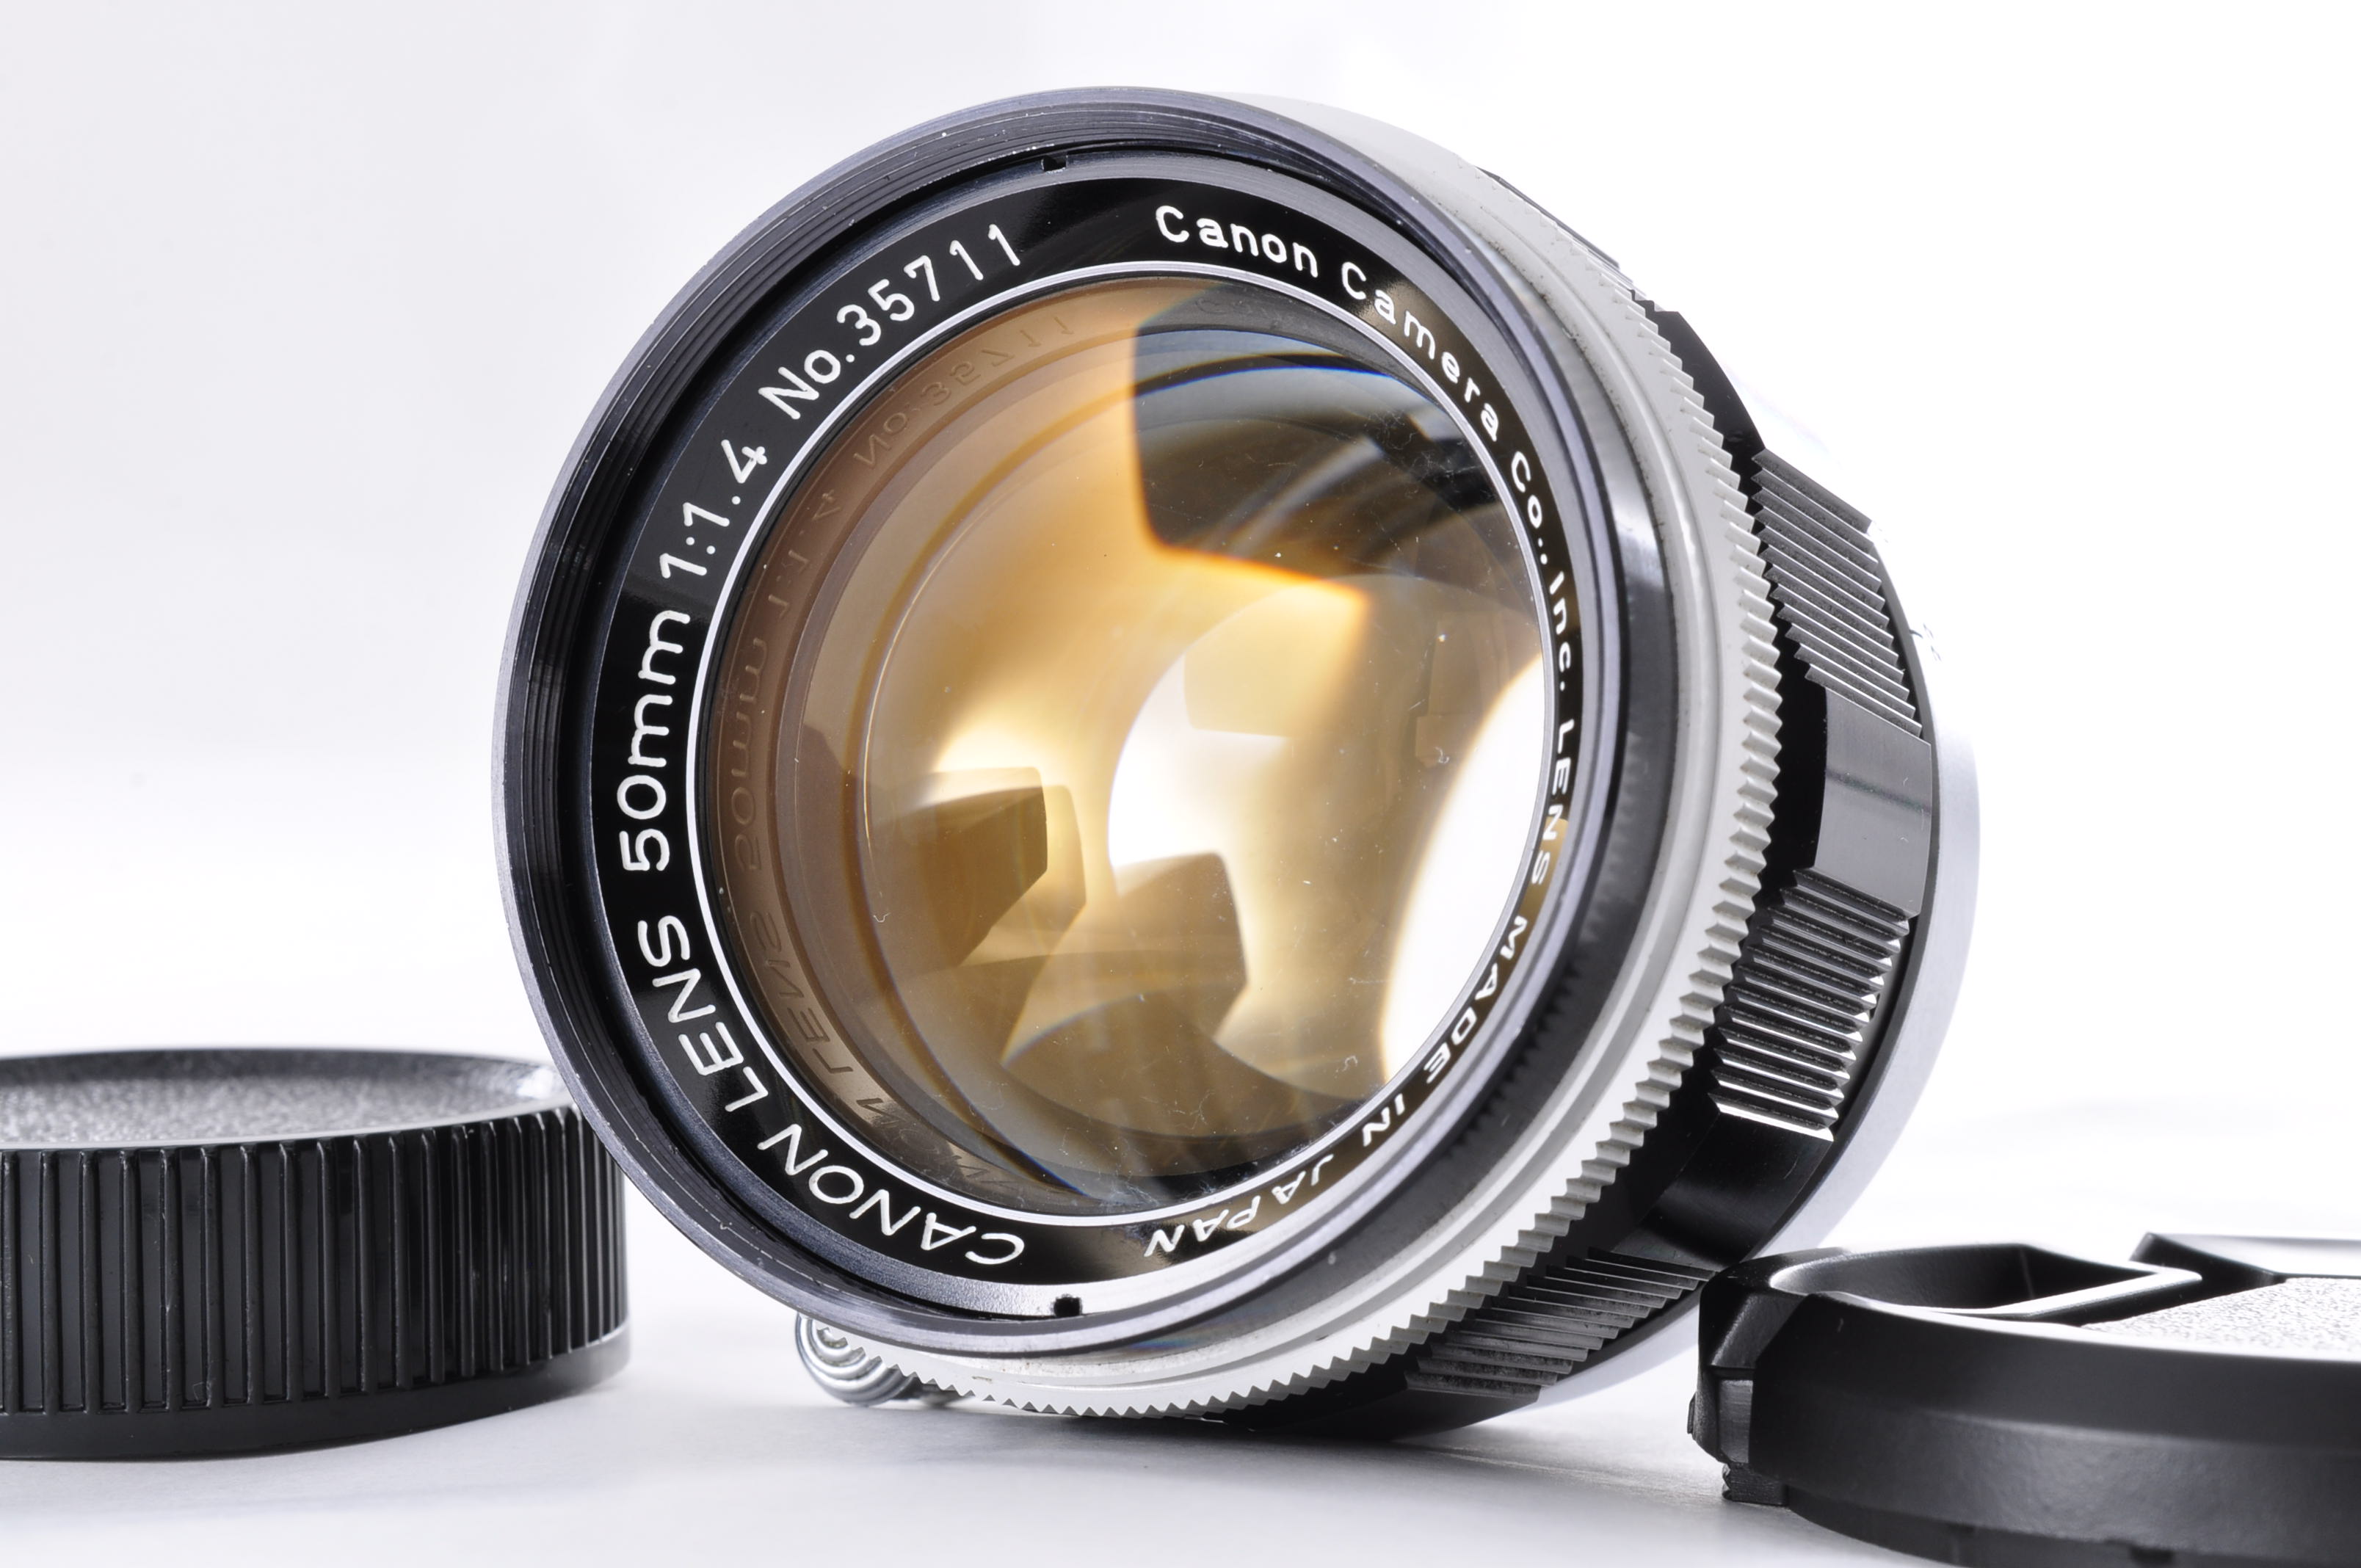 Canon L39 50mm f/1.4 Lens LTM Leica Screw Mount w/Caps [Near Mint] From Japan img01